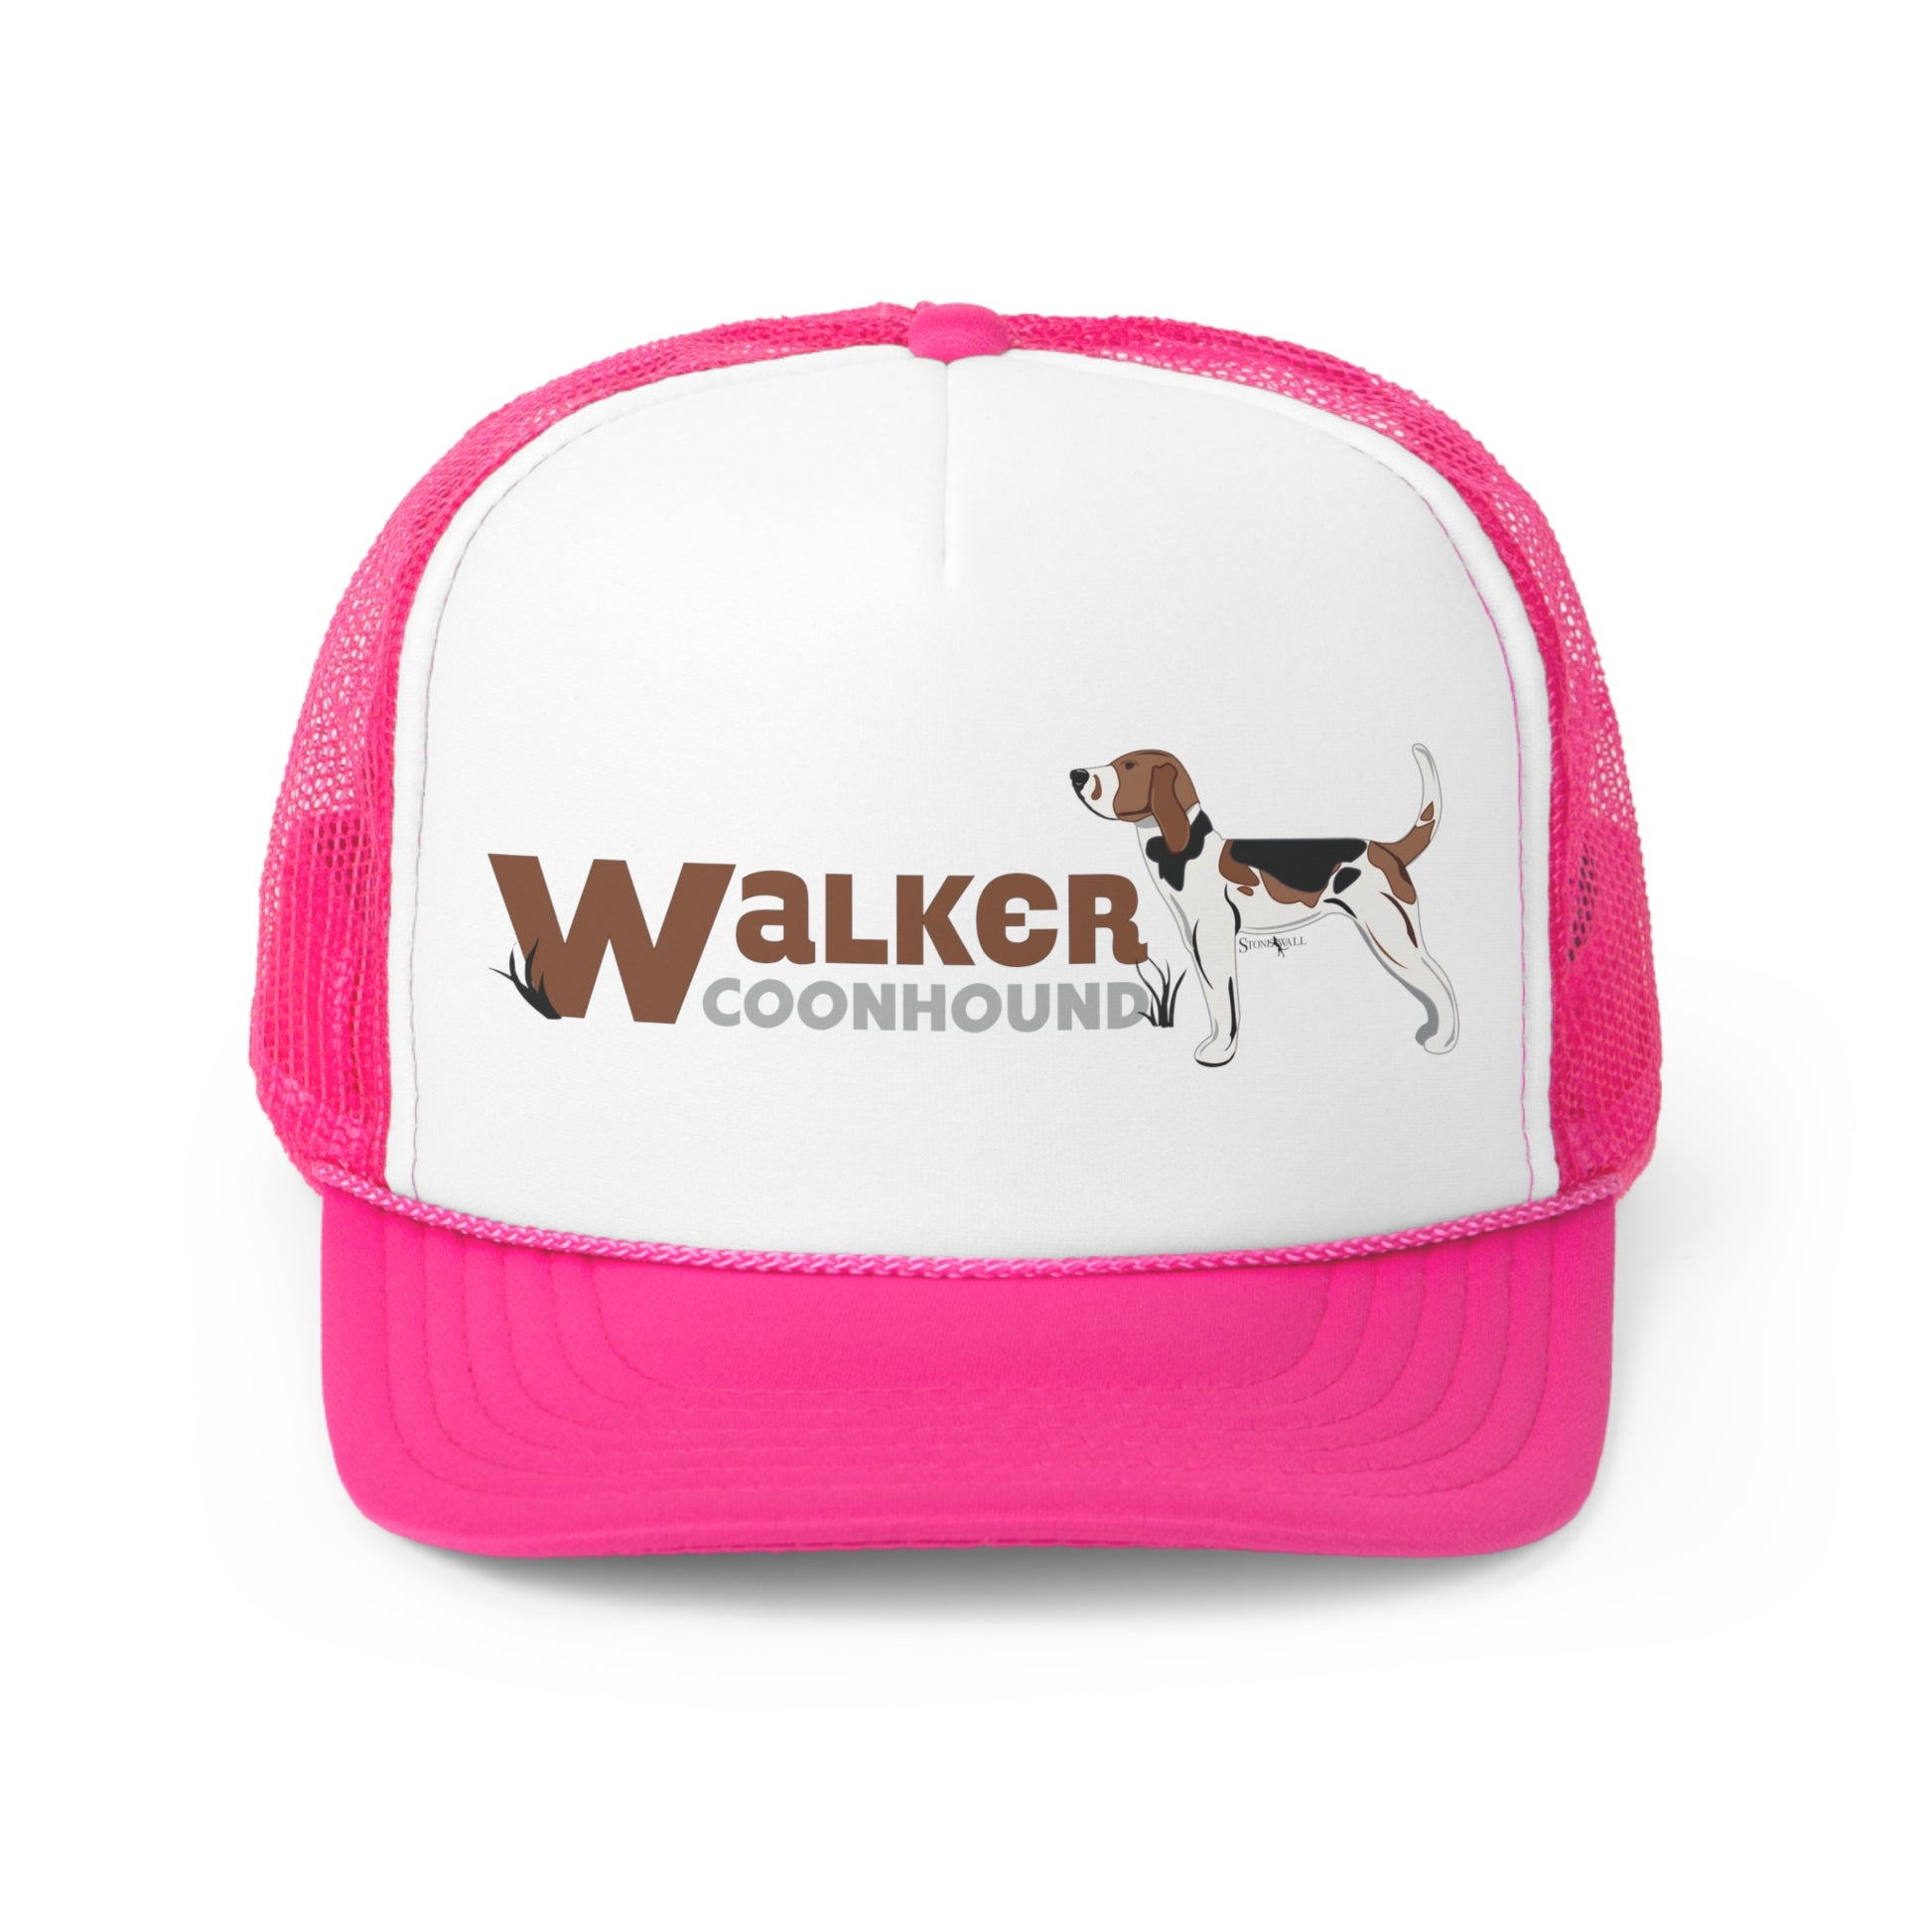  Walker Coonhound trucker hat